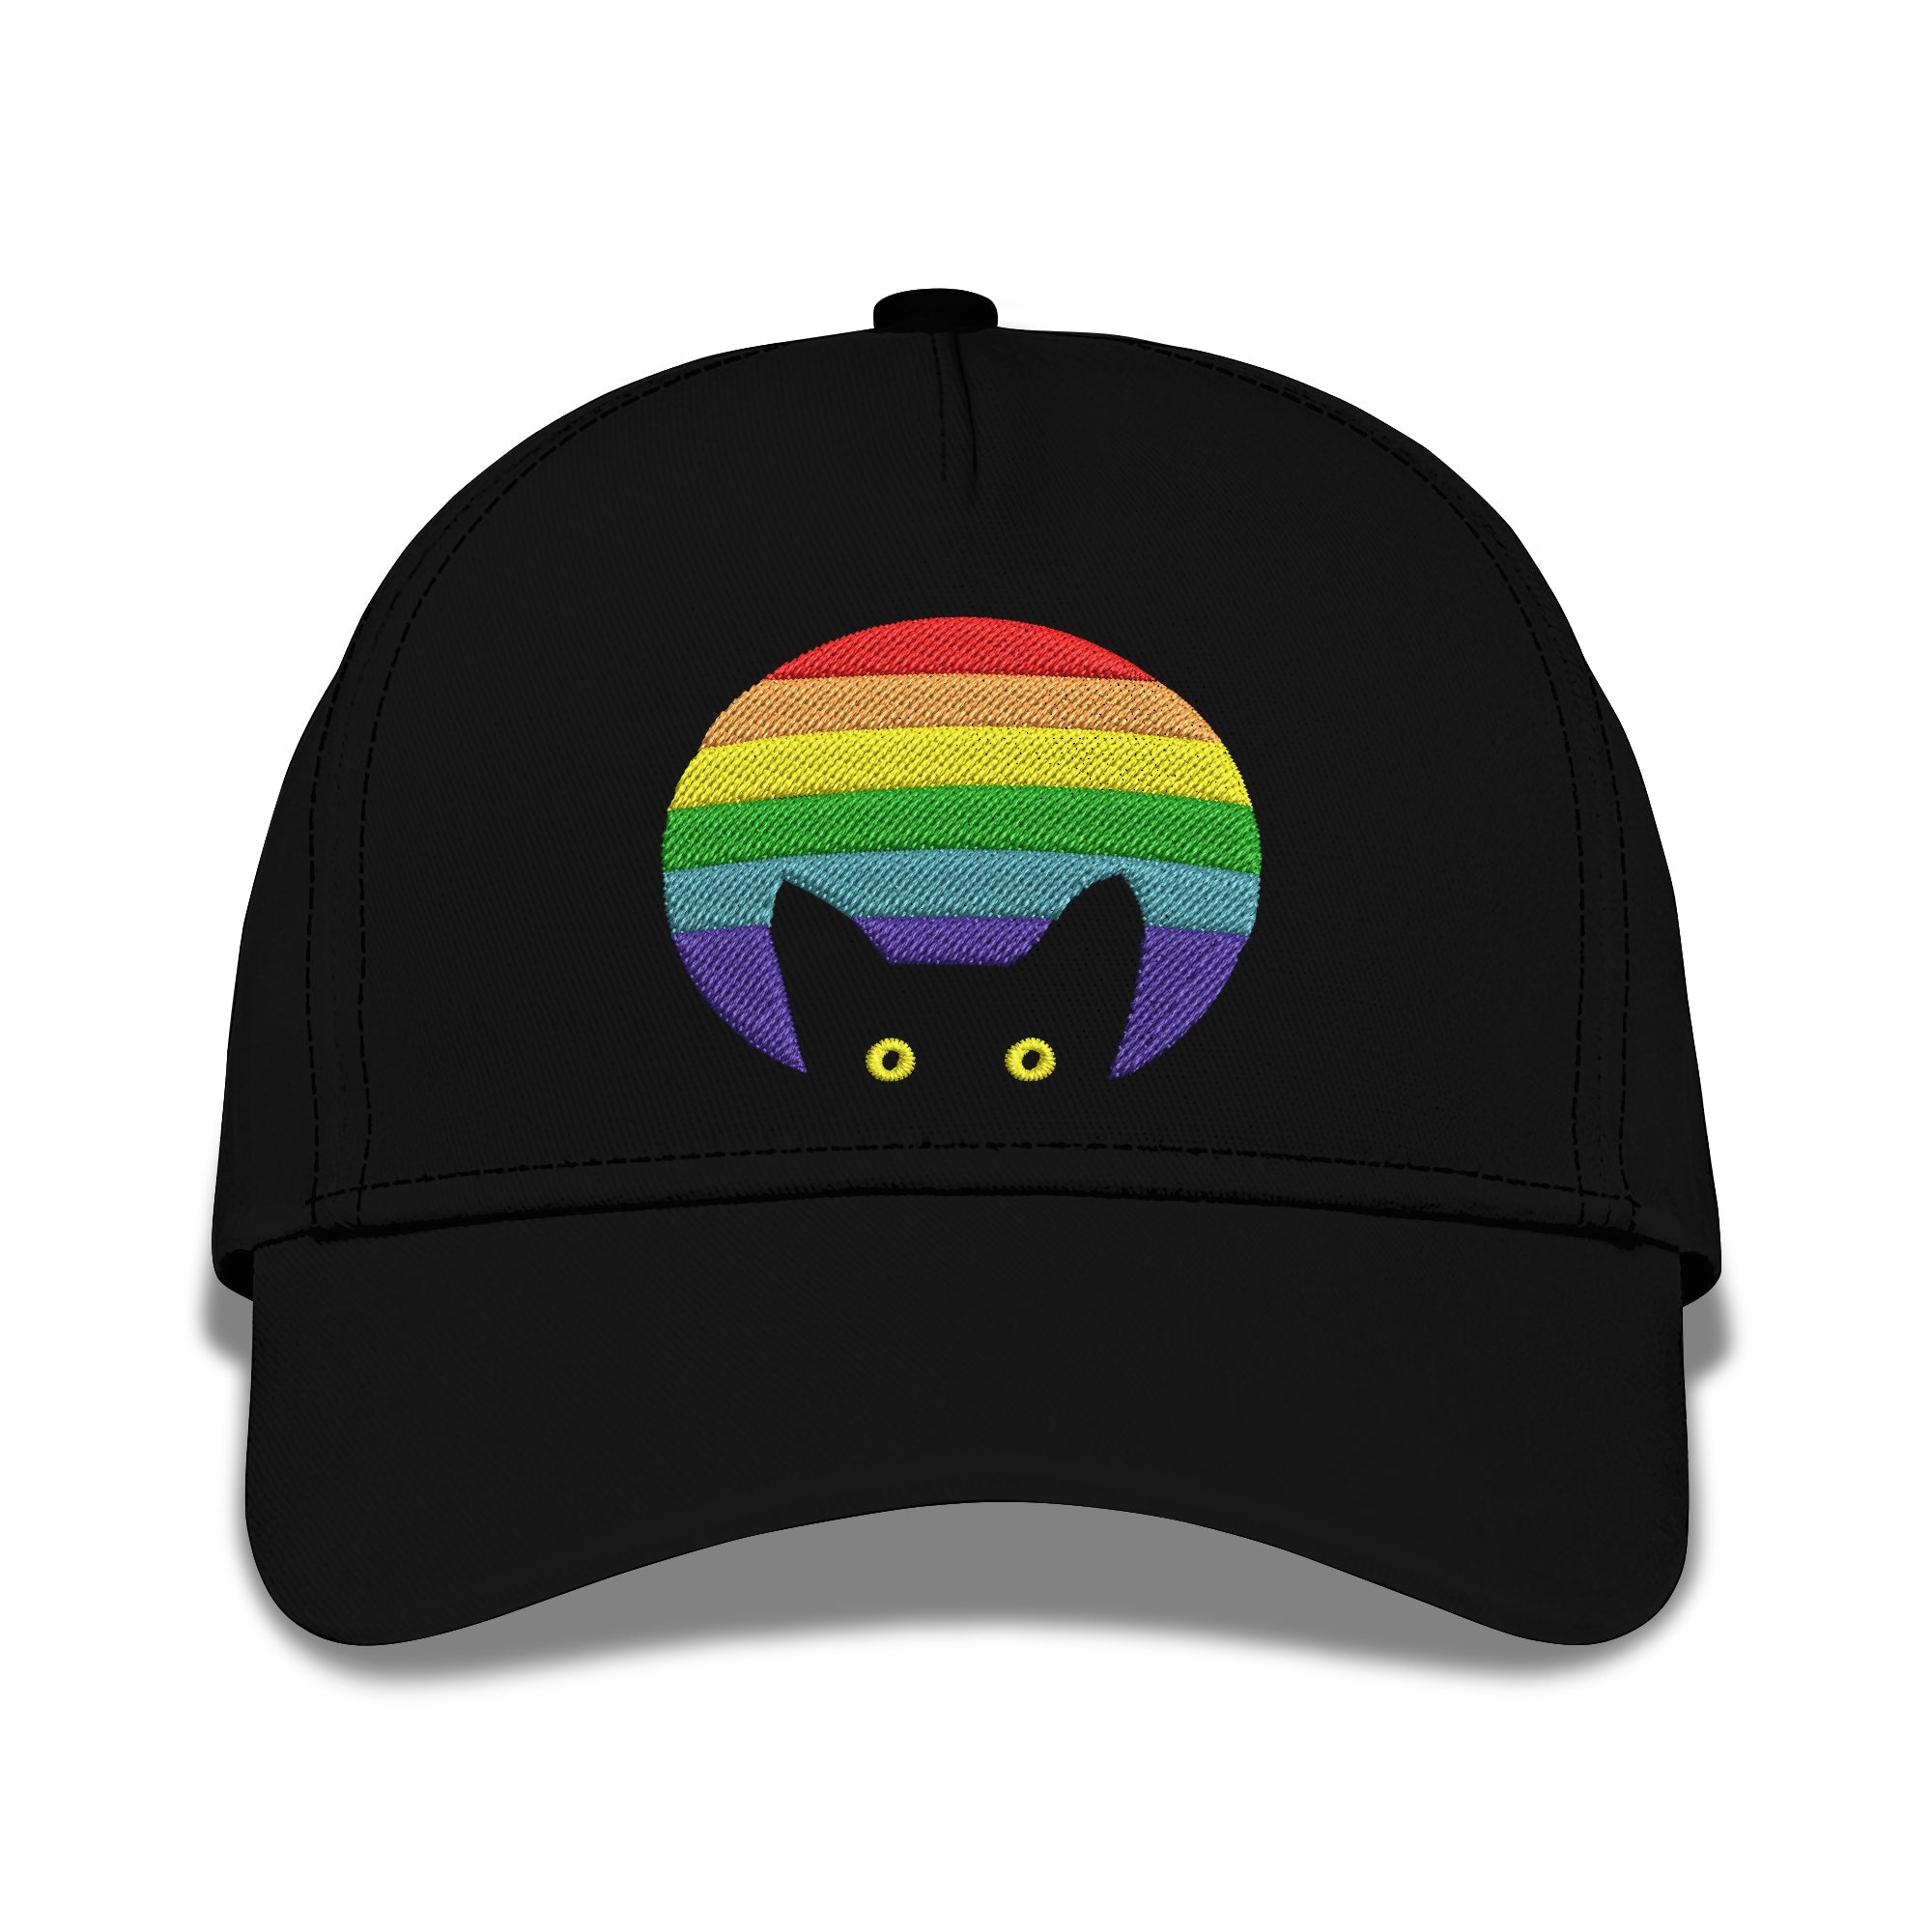 Black Cat Embroidered Baseball Caps